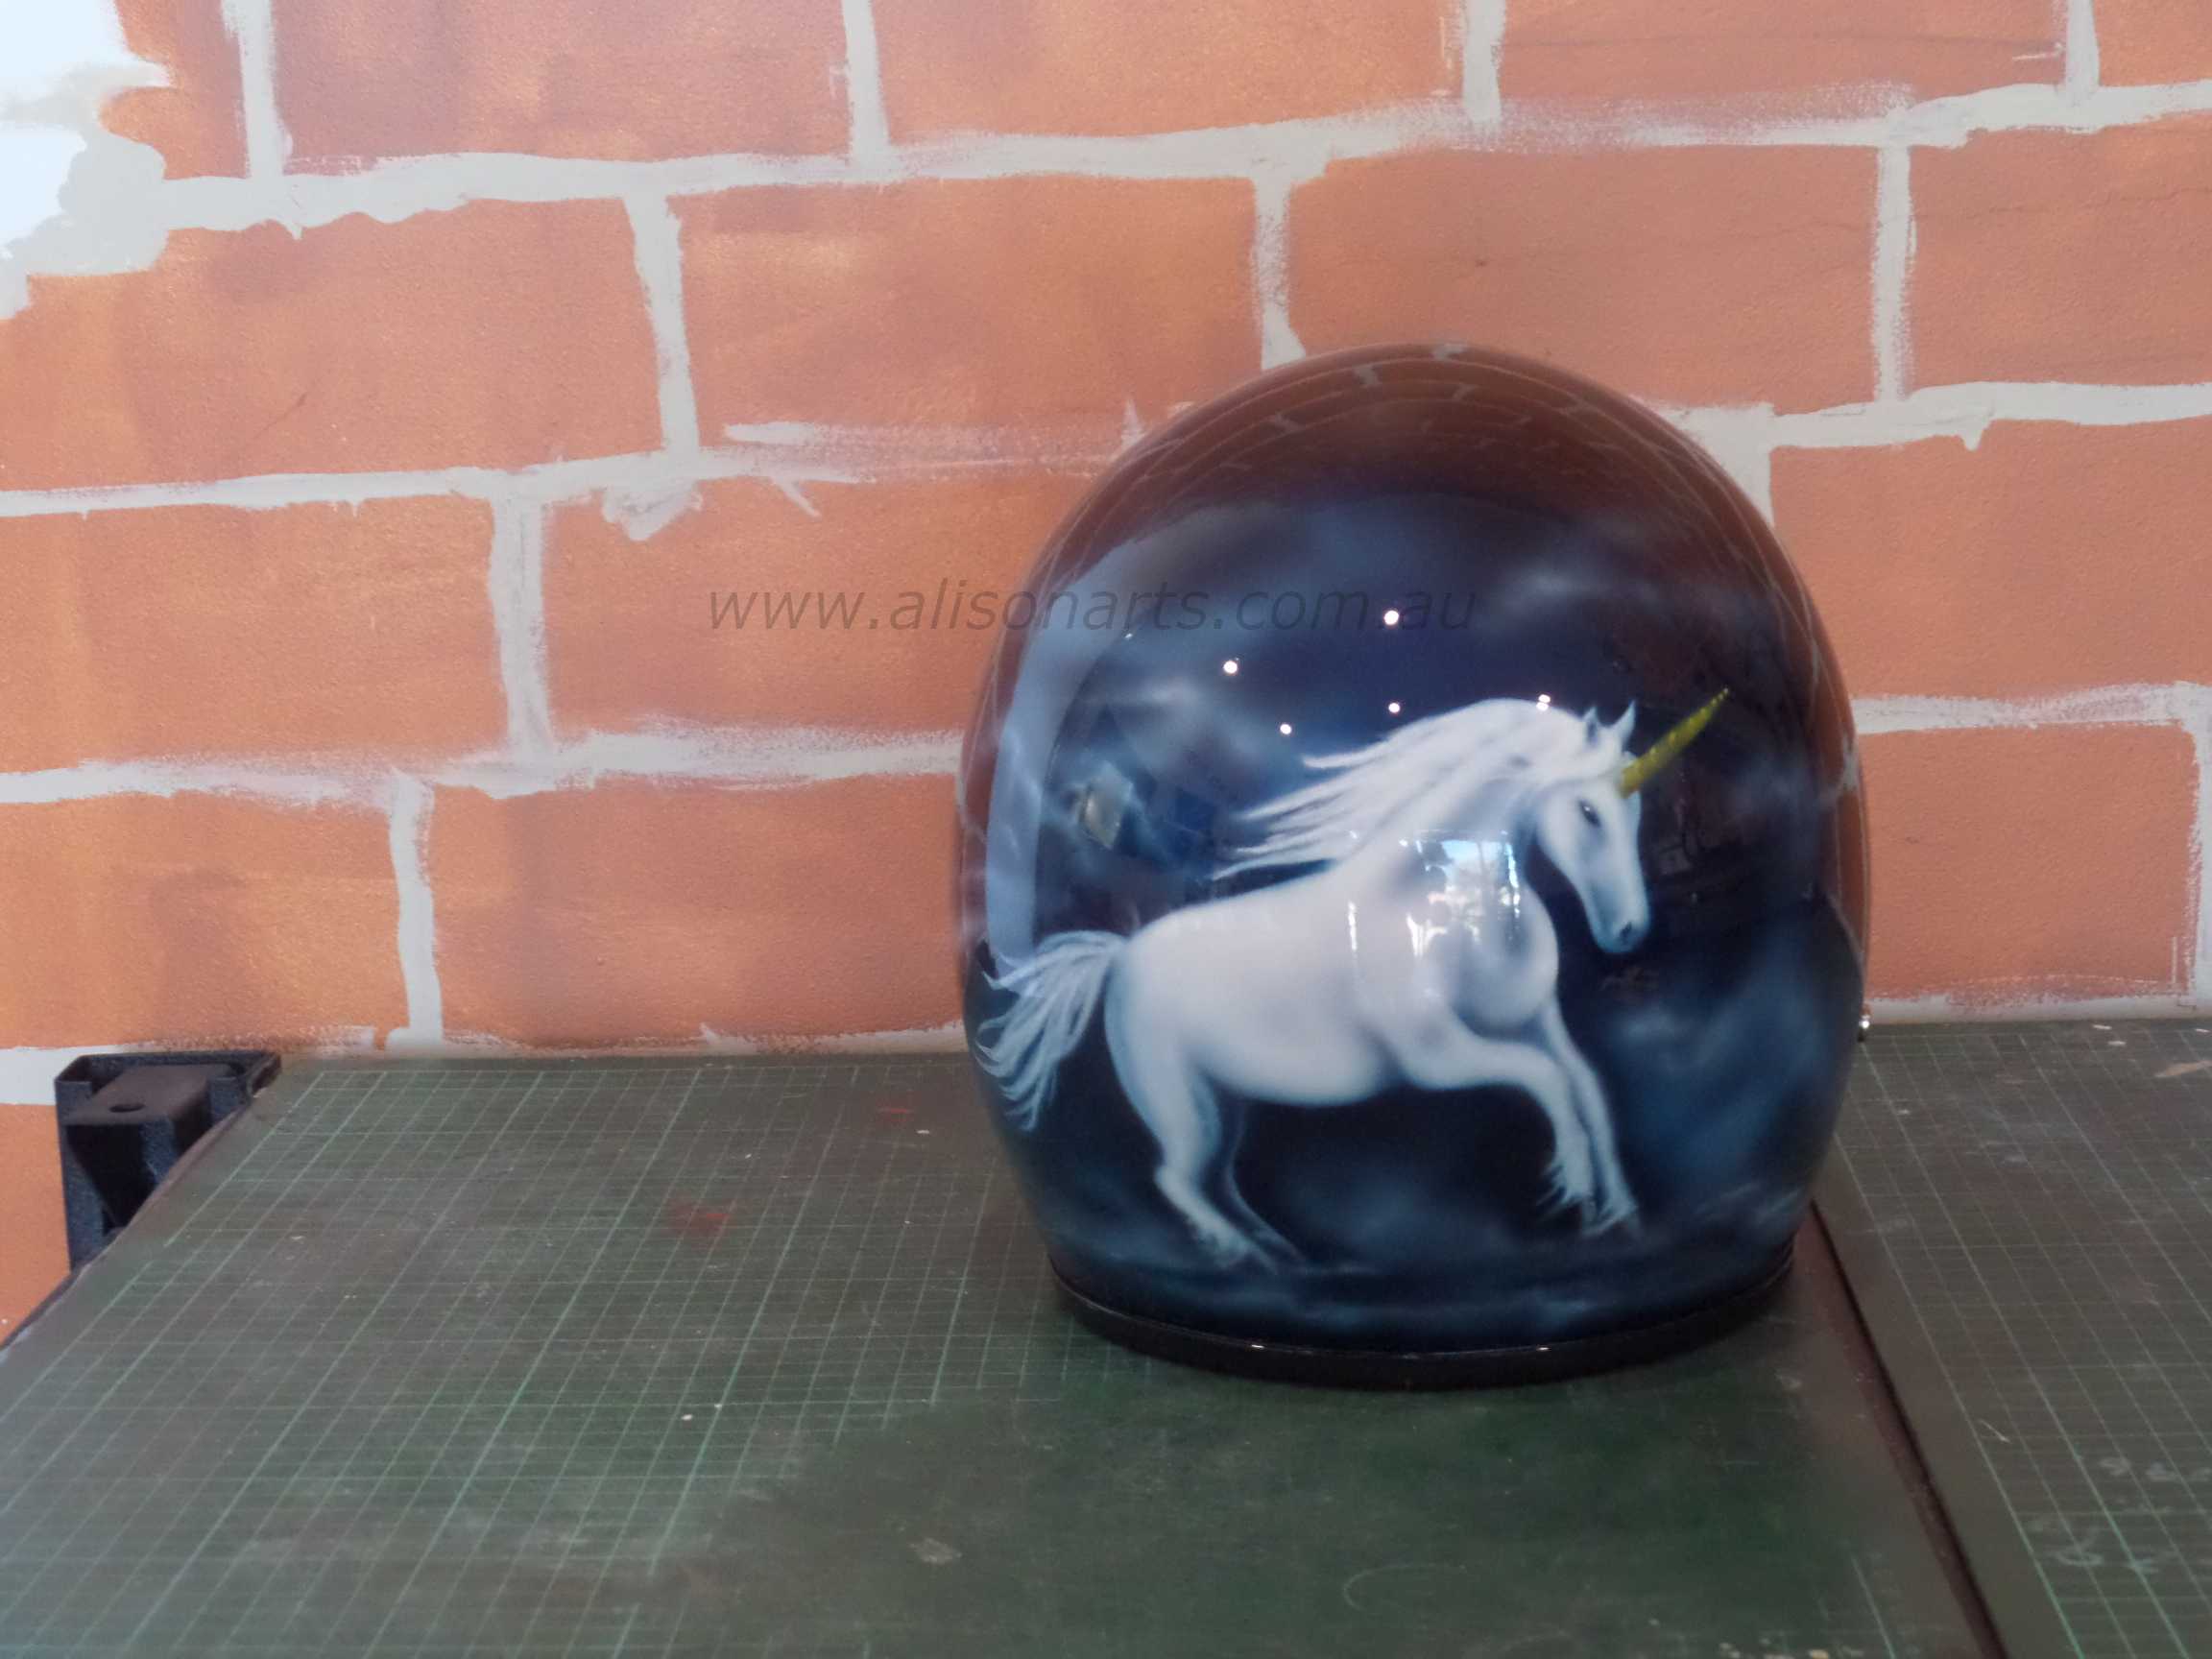 airbrushed helmet- unicorn design